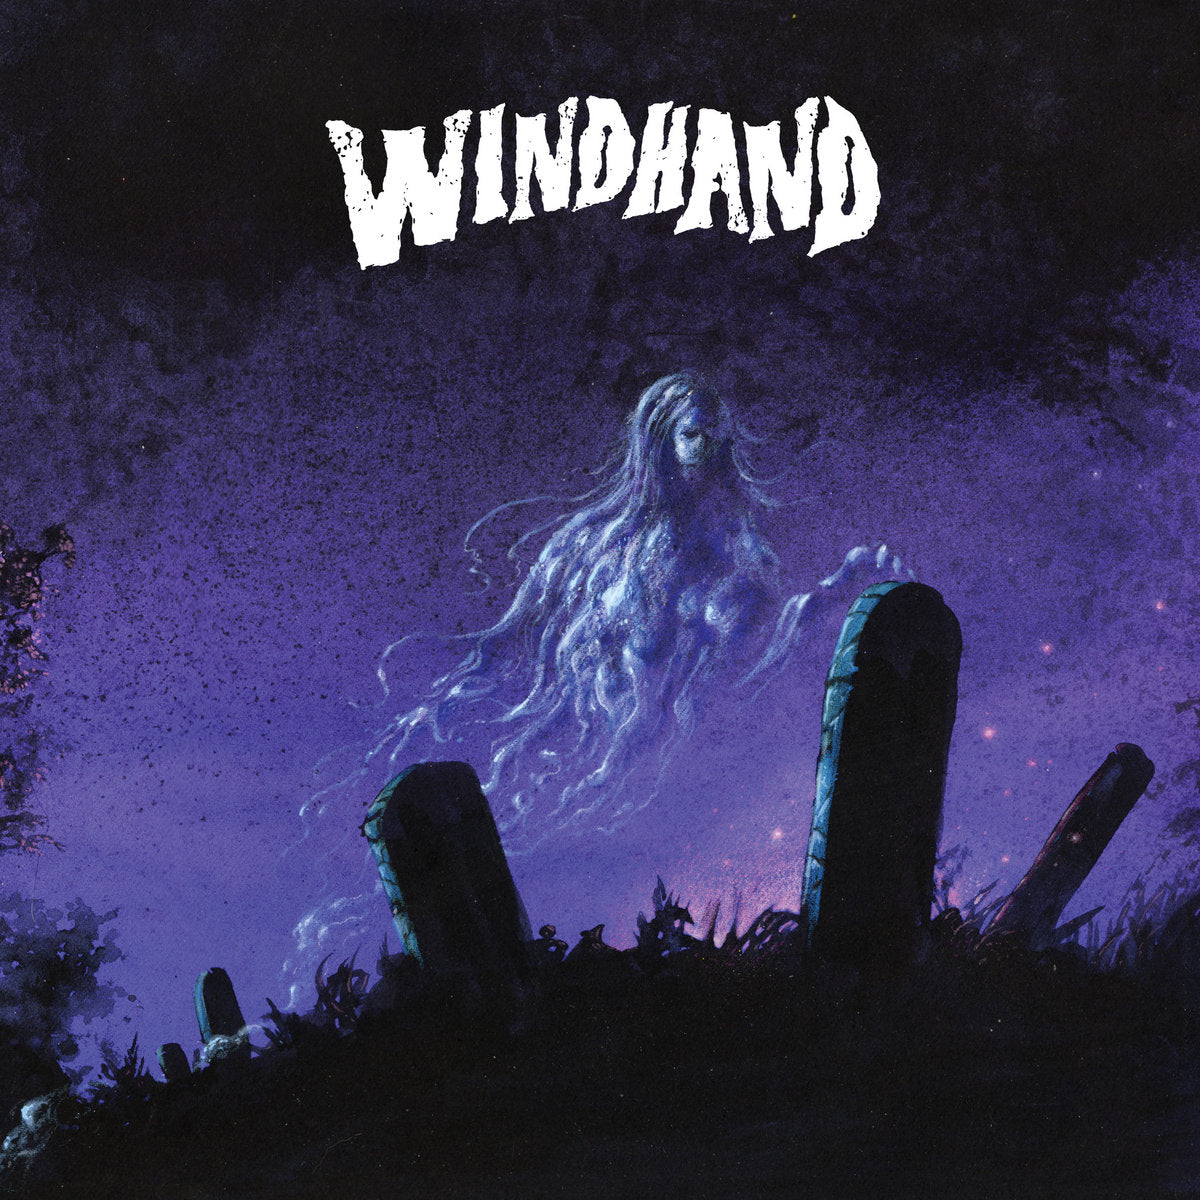 WINDHAND "Windhand" 2xLP